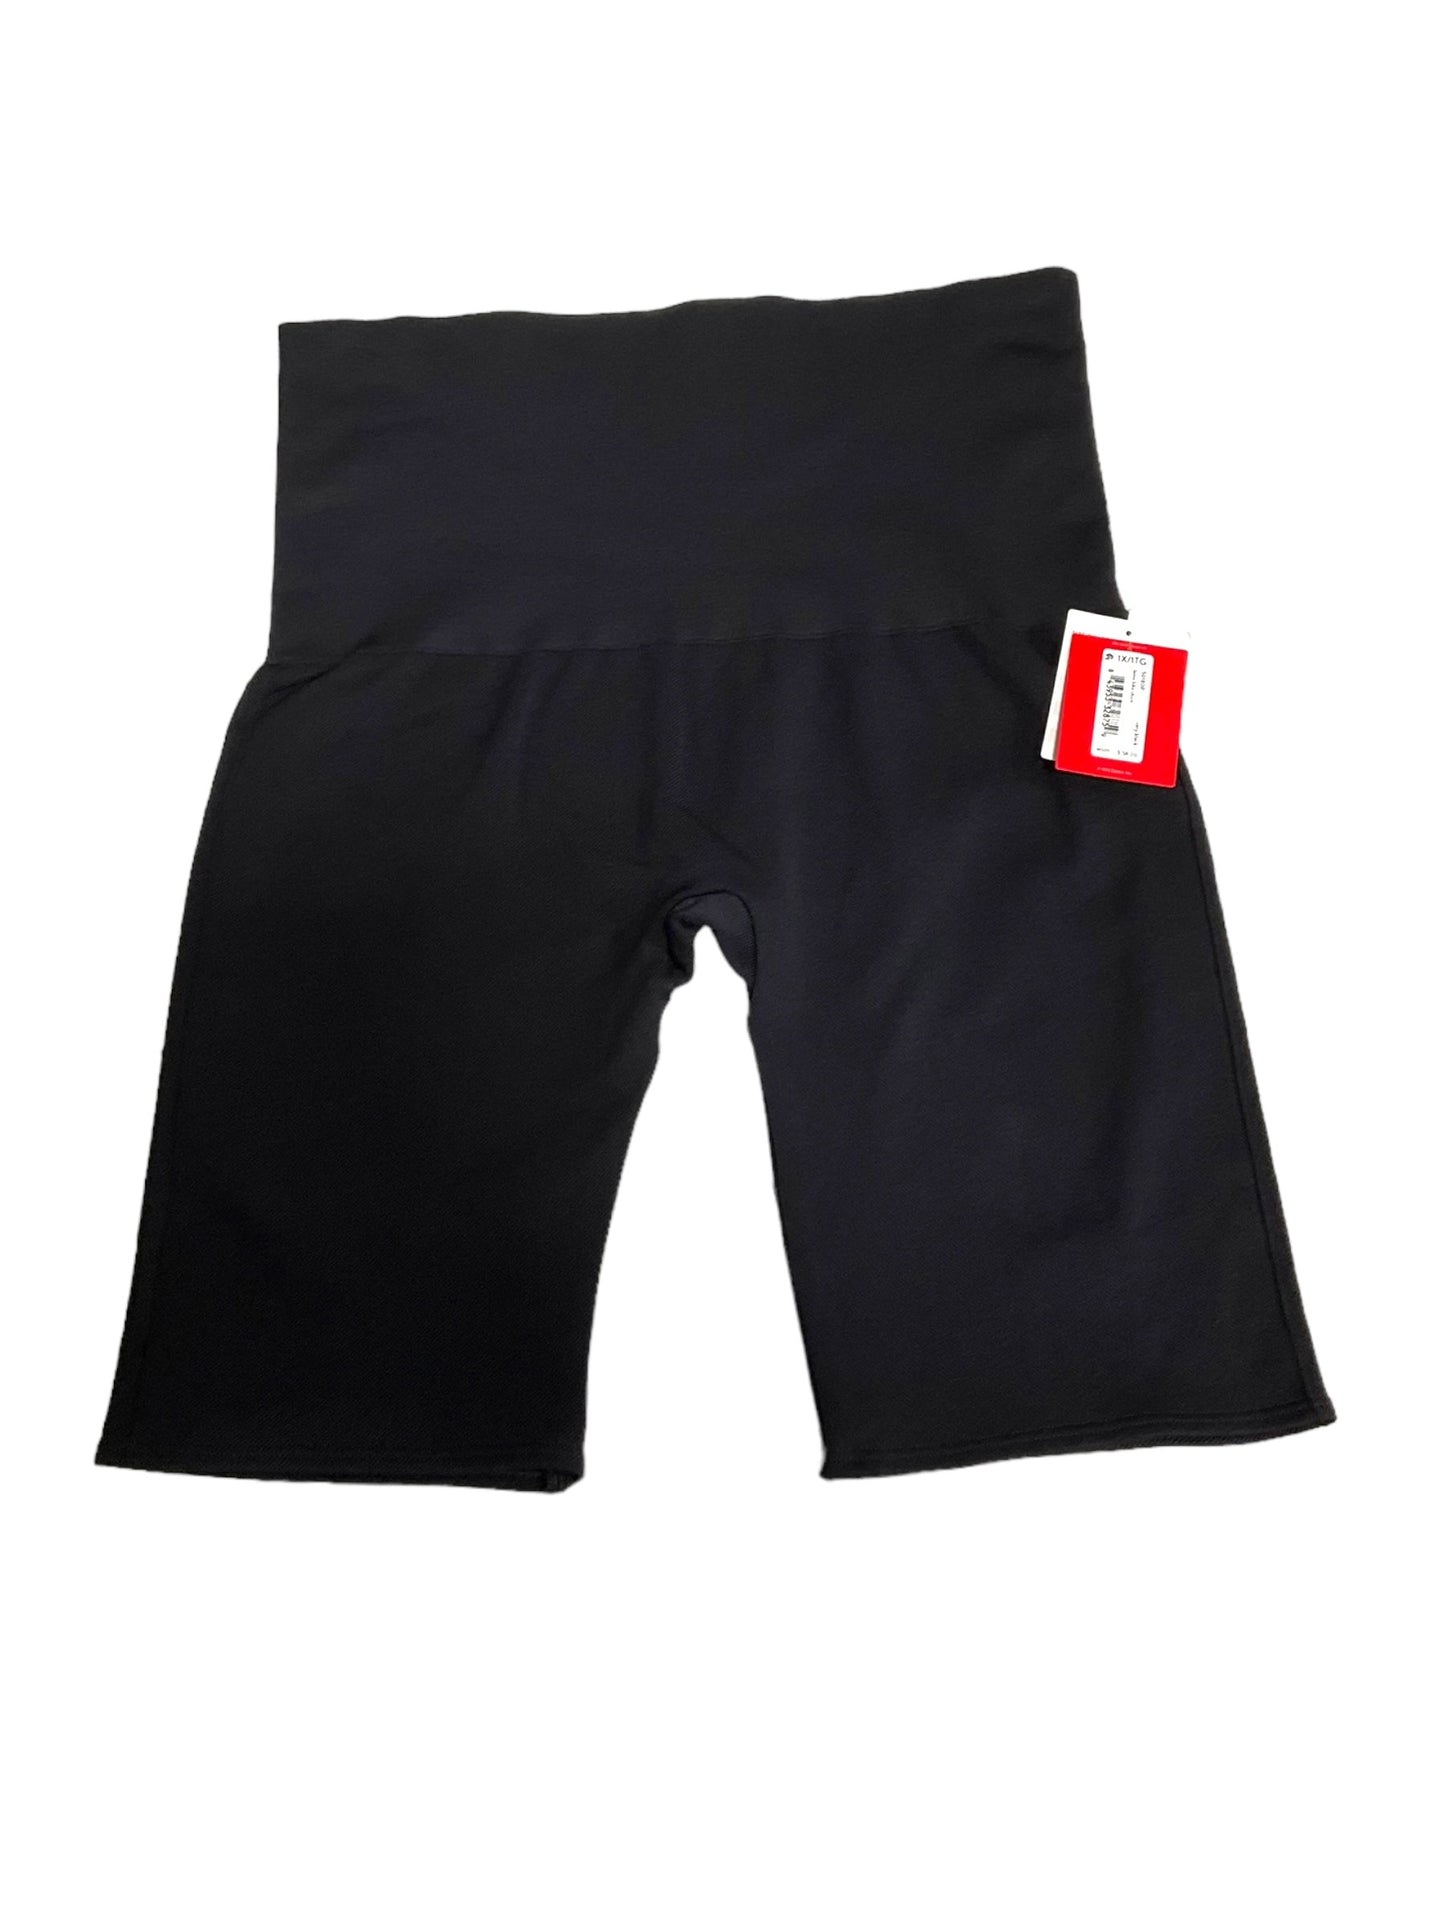 Black Shorts Spanx, Size 1x